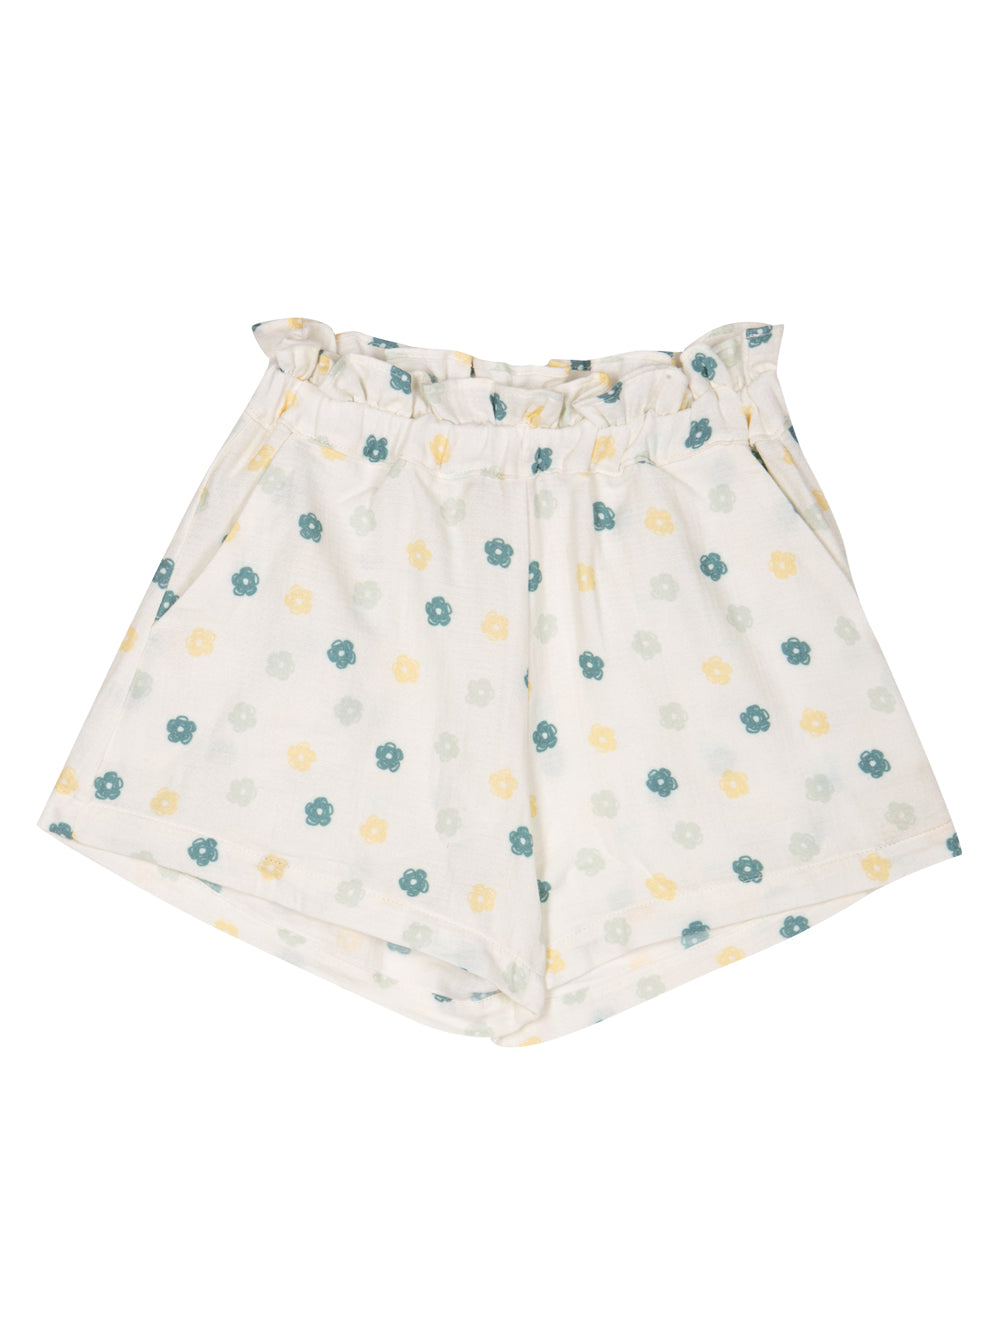 PREORDER: Adeline Muslin Flower Shorts